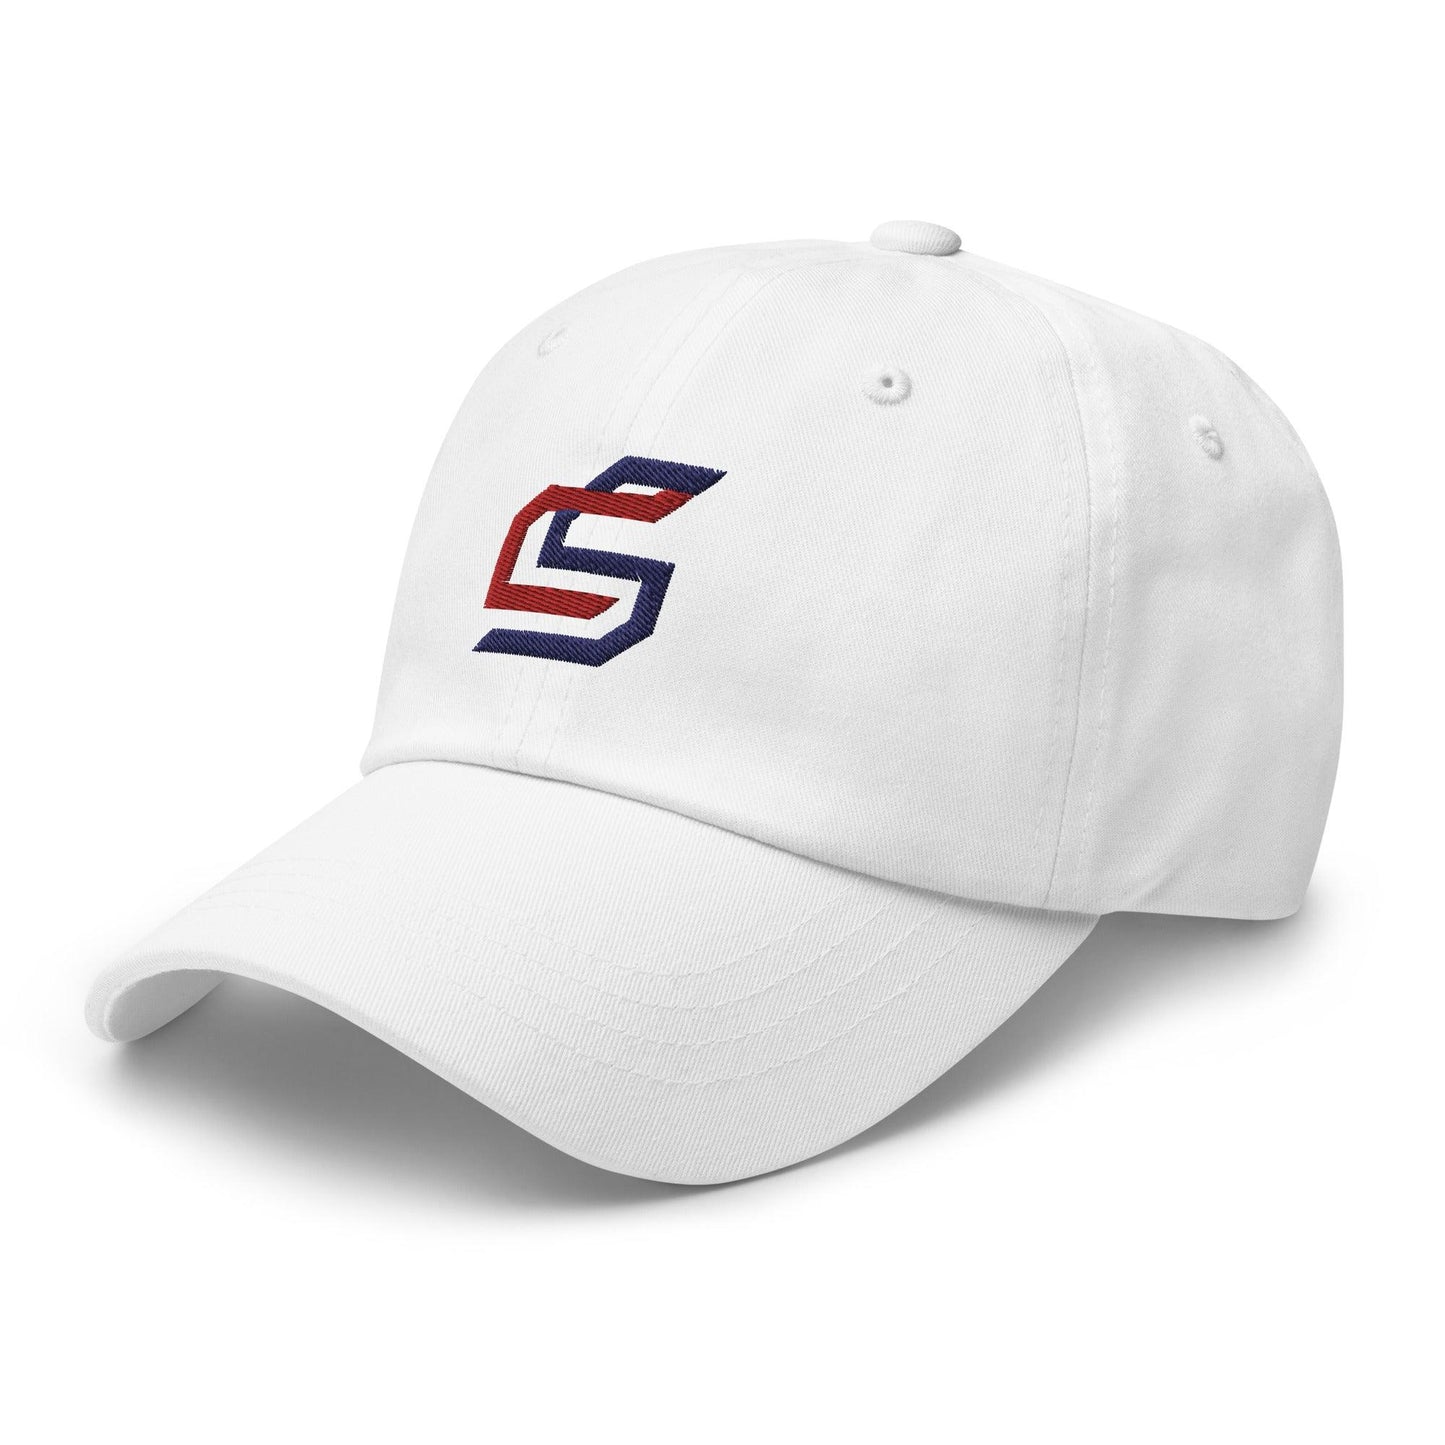 Cortrelle Simpson "Essential" hat - Fan Arch